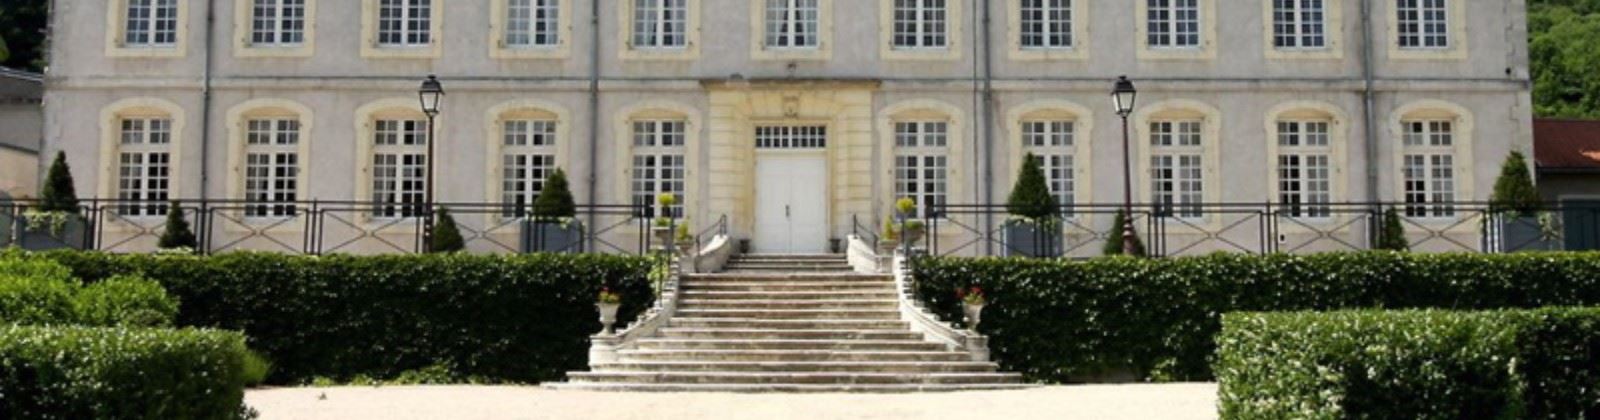 OLEVENE Image - chateau-vandeleville-olevene-hotel-restaurant-meeting-booking-